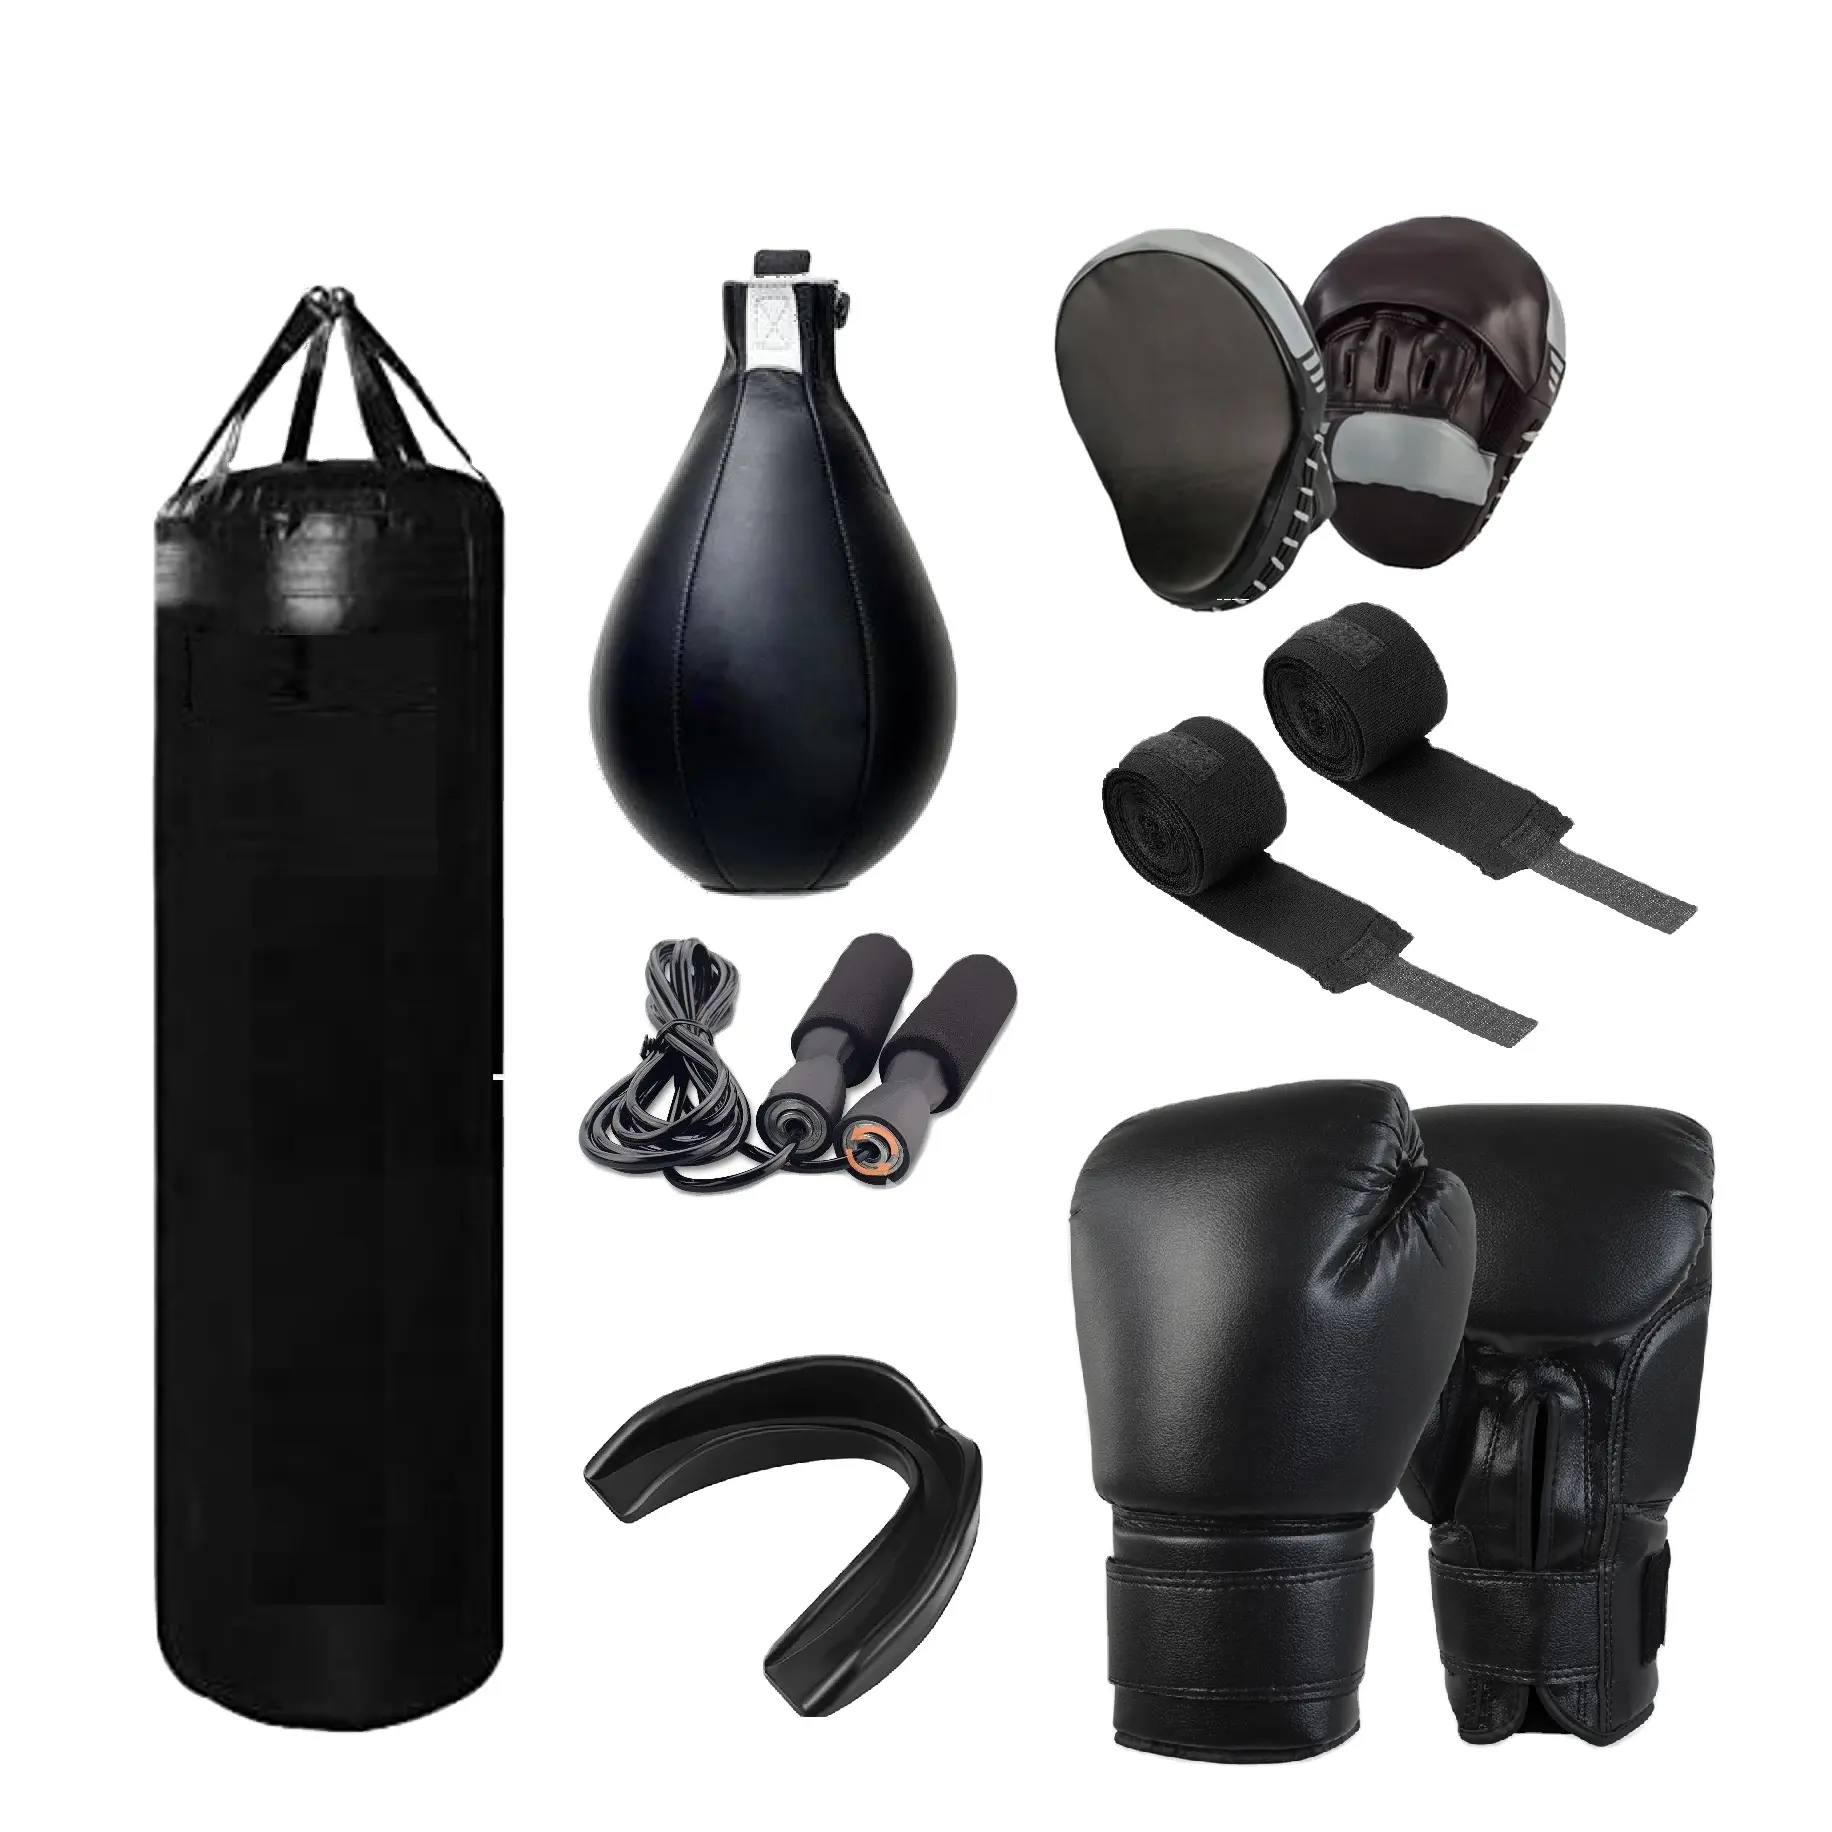 Boxing Gloves & Equipment - Bag Set